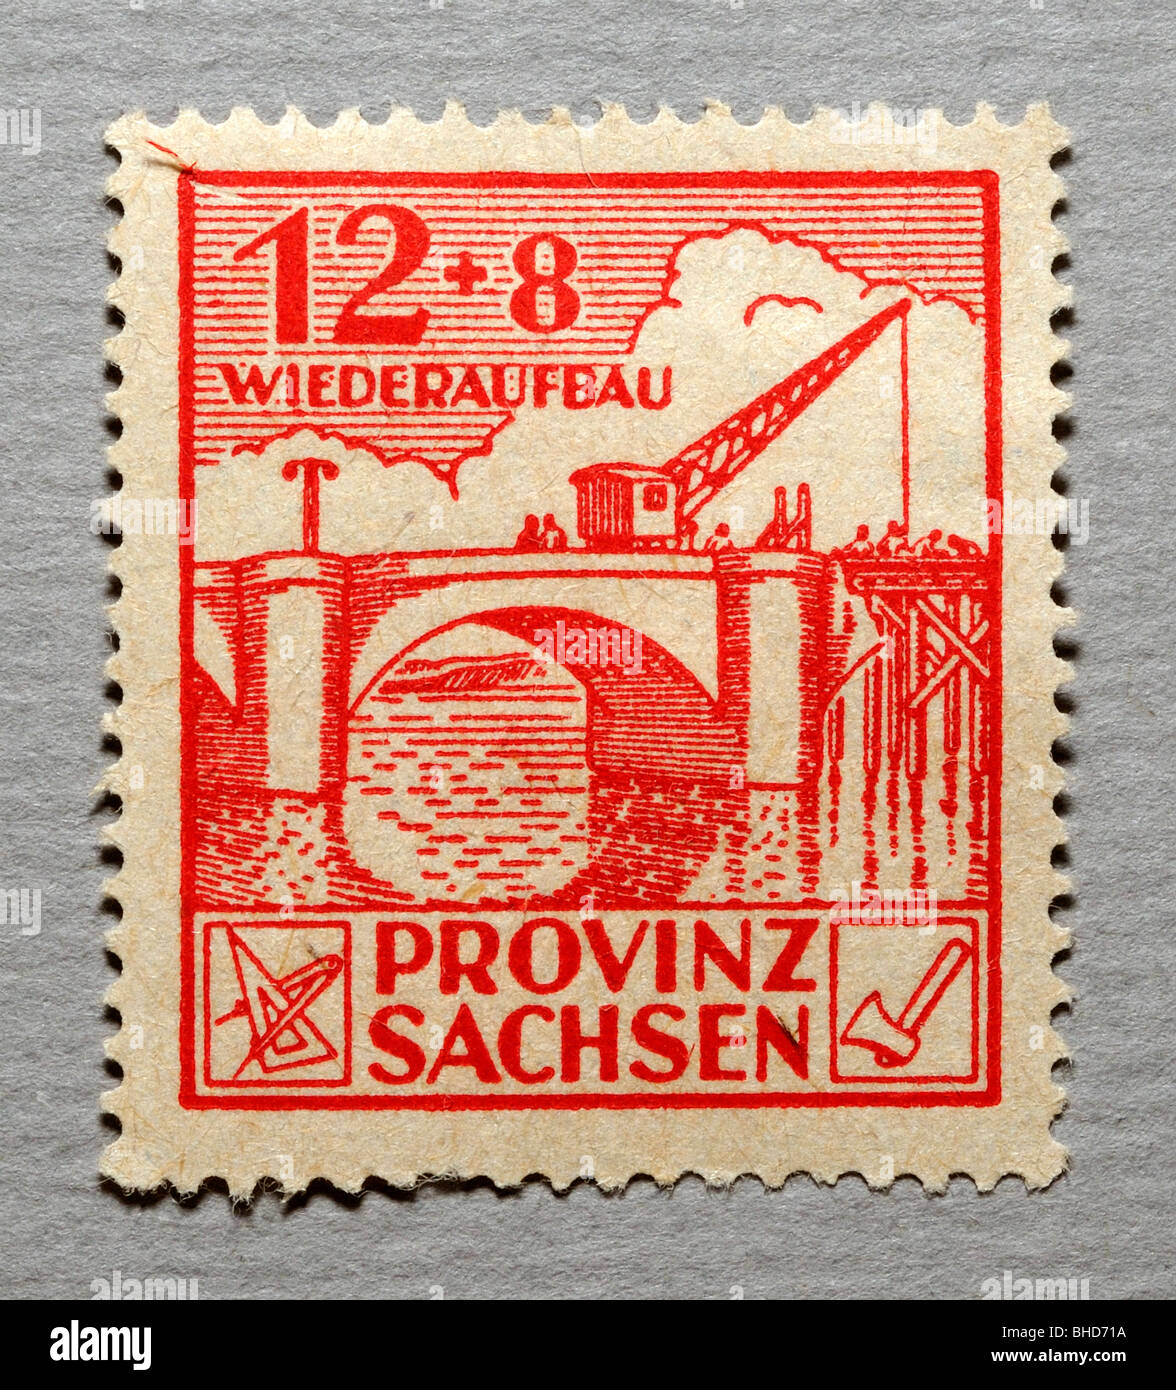 Sachsen Province, German Postage Stamp. Stock Photo